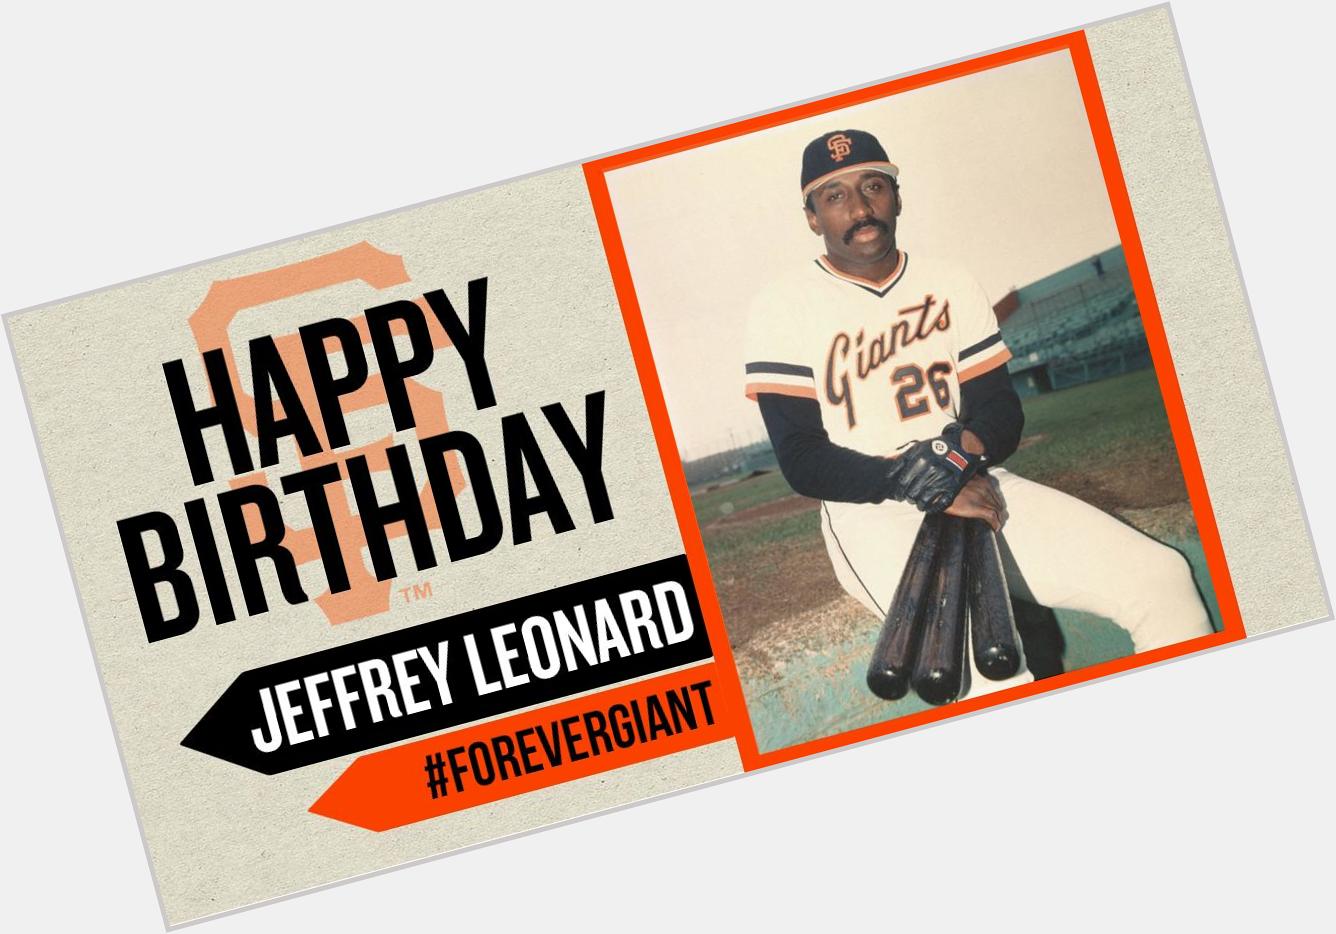 Happy Birthday to Jeffrey Leonard!  